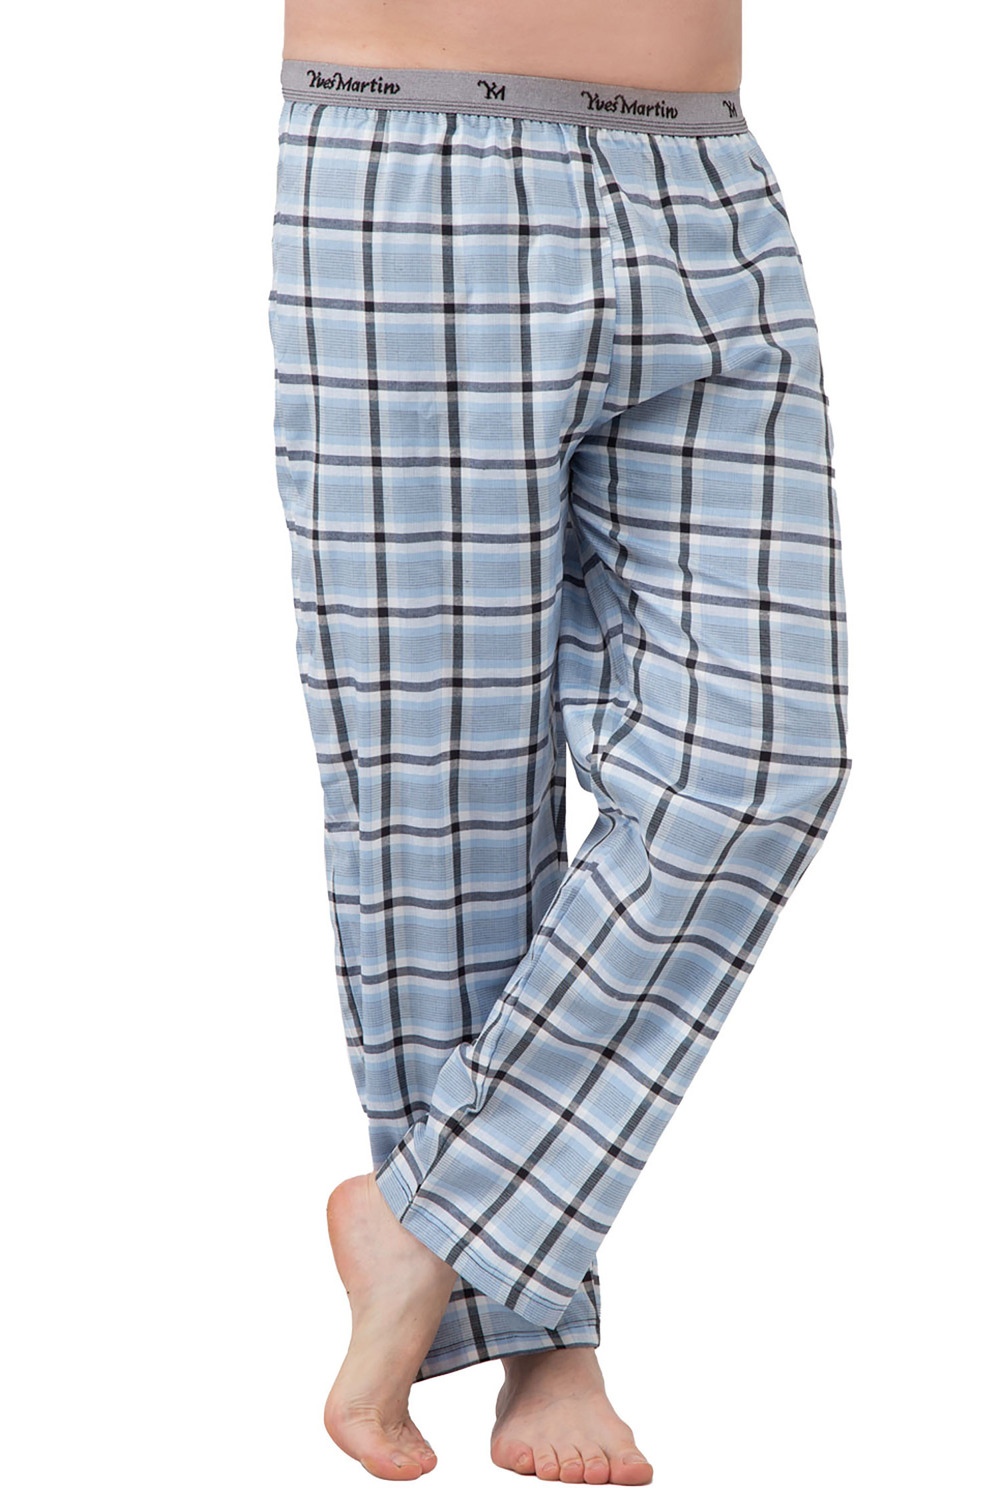 Yves Martin - Men's flannel sleep pants, blue plaid, large (L)